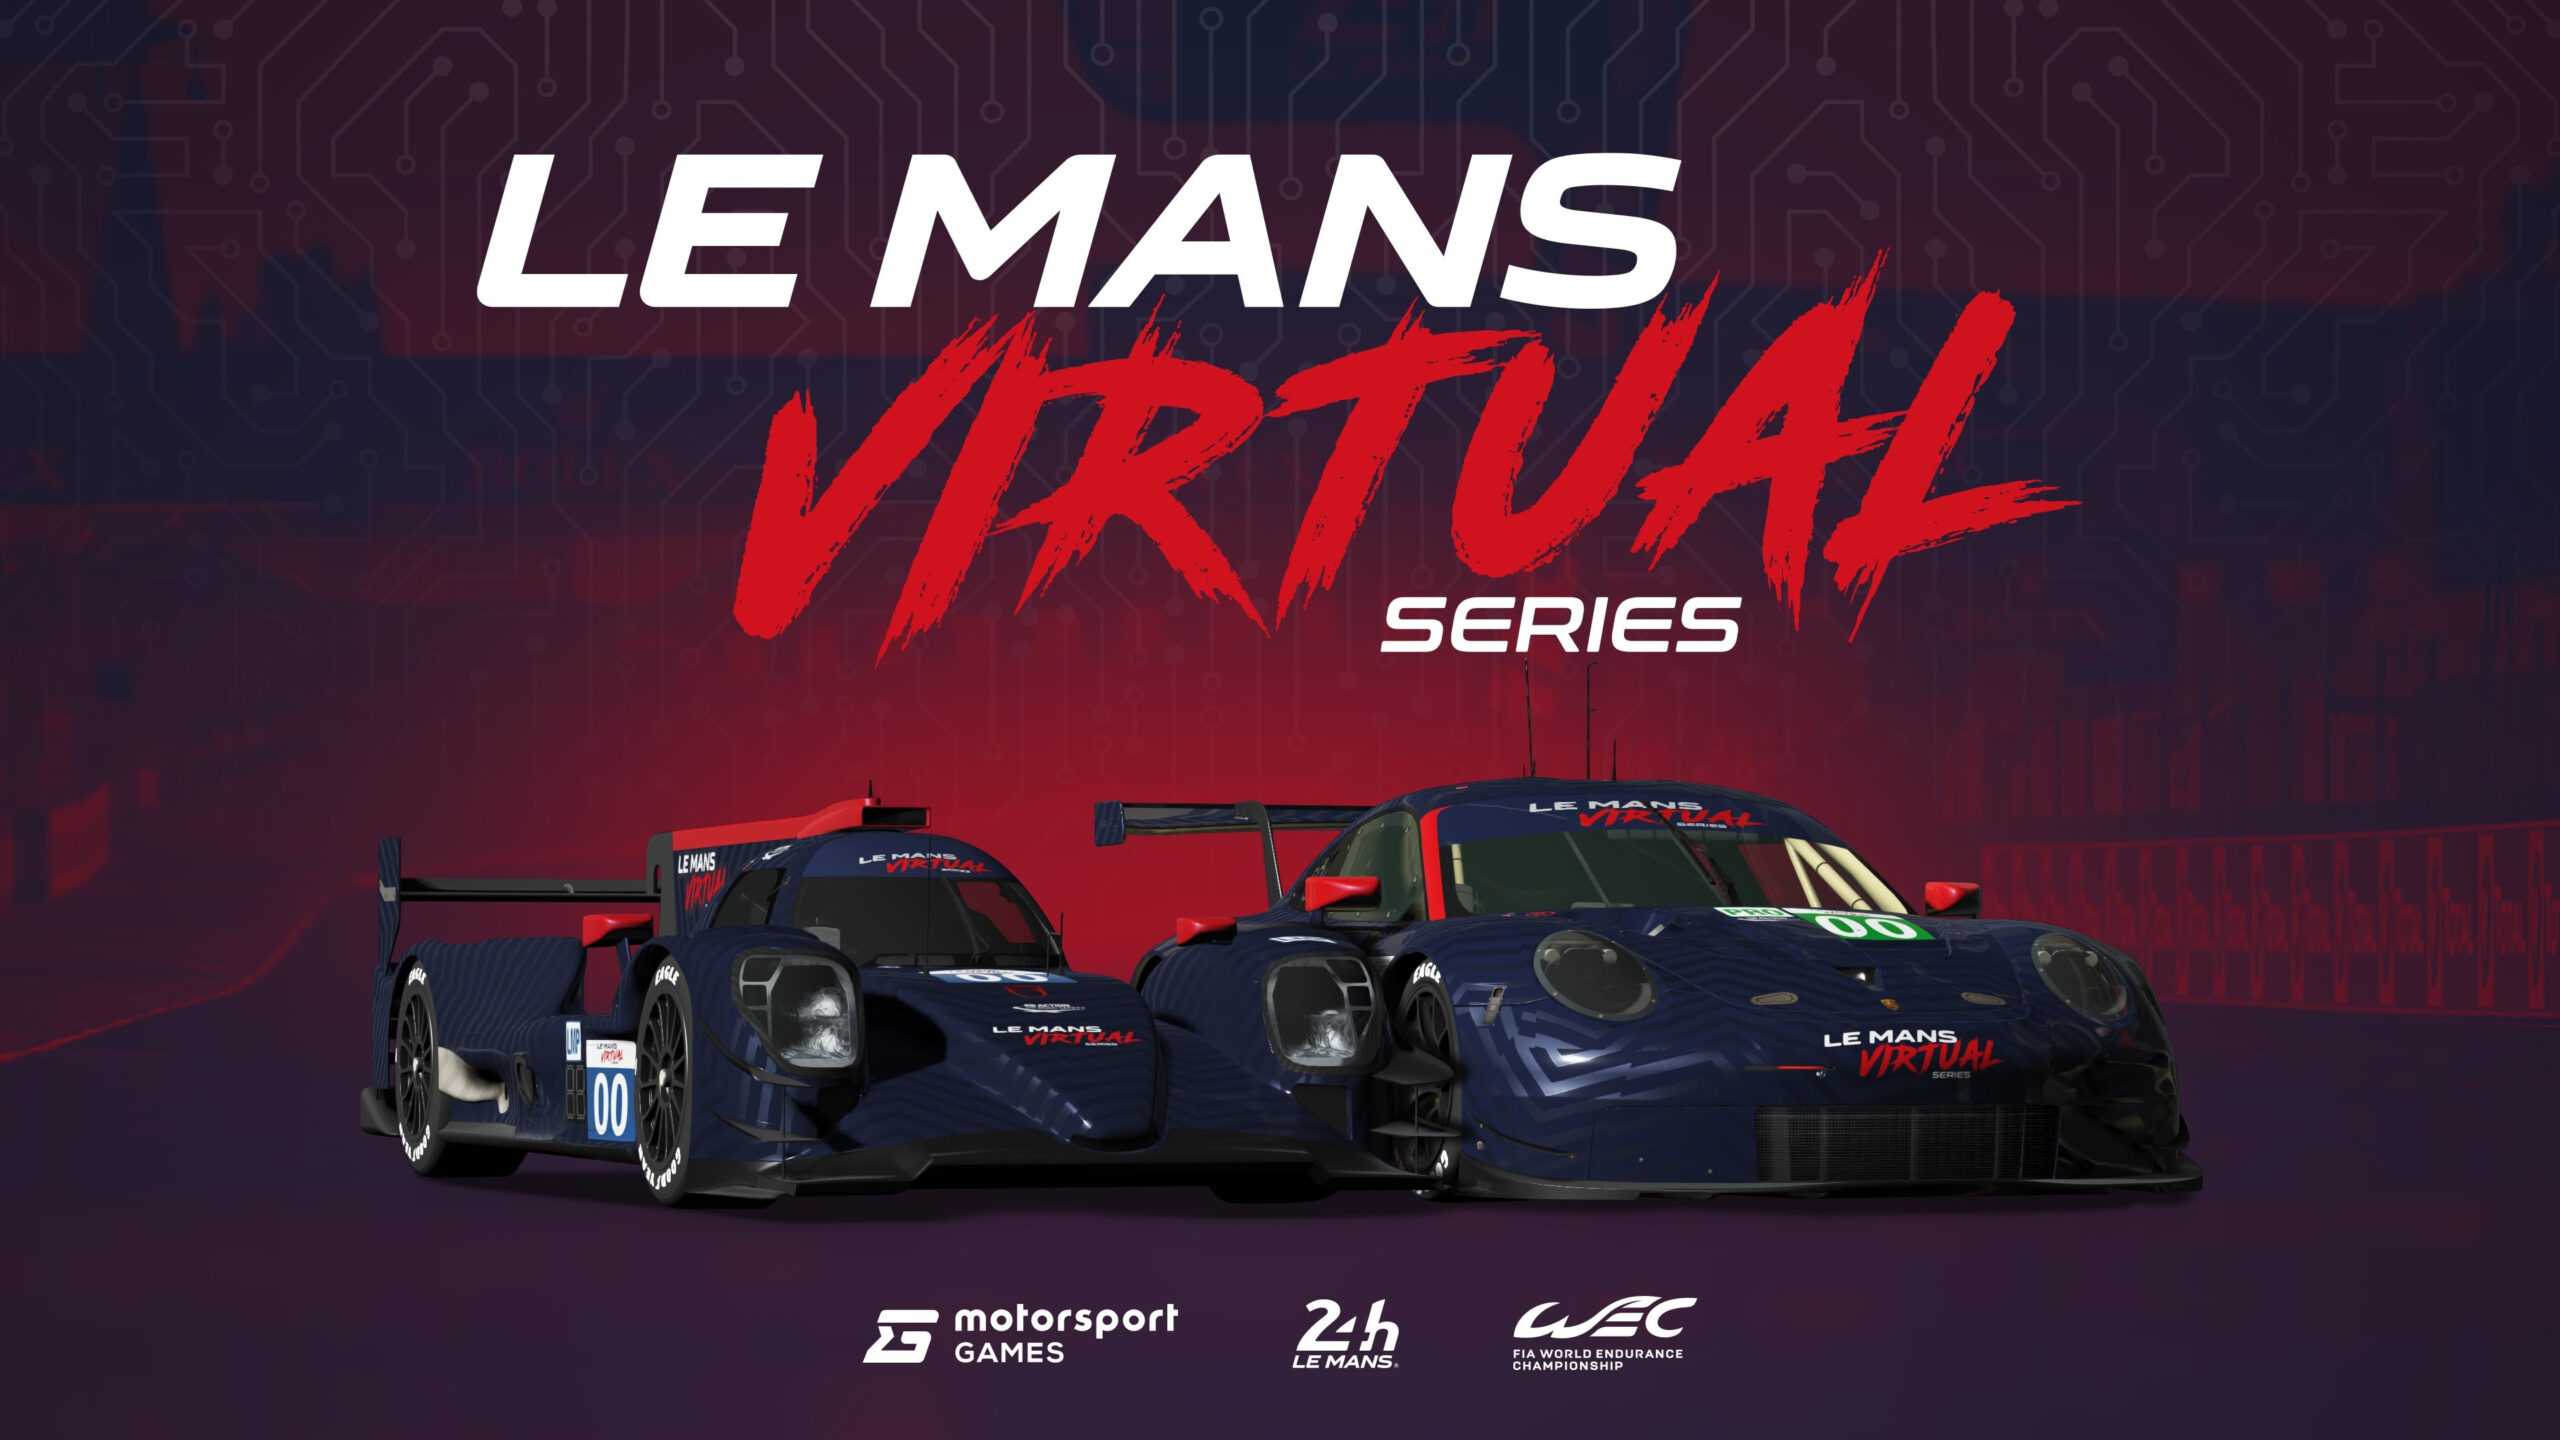 Le Mans Virtual Series divulga calendário